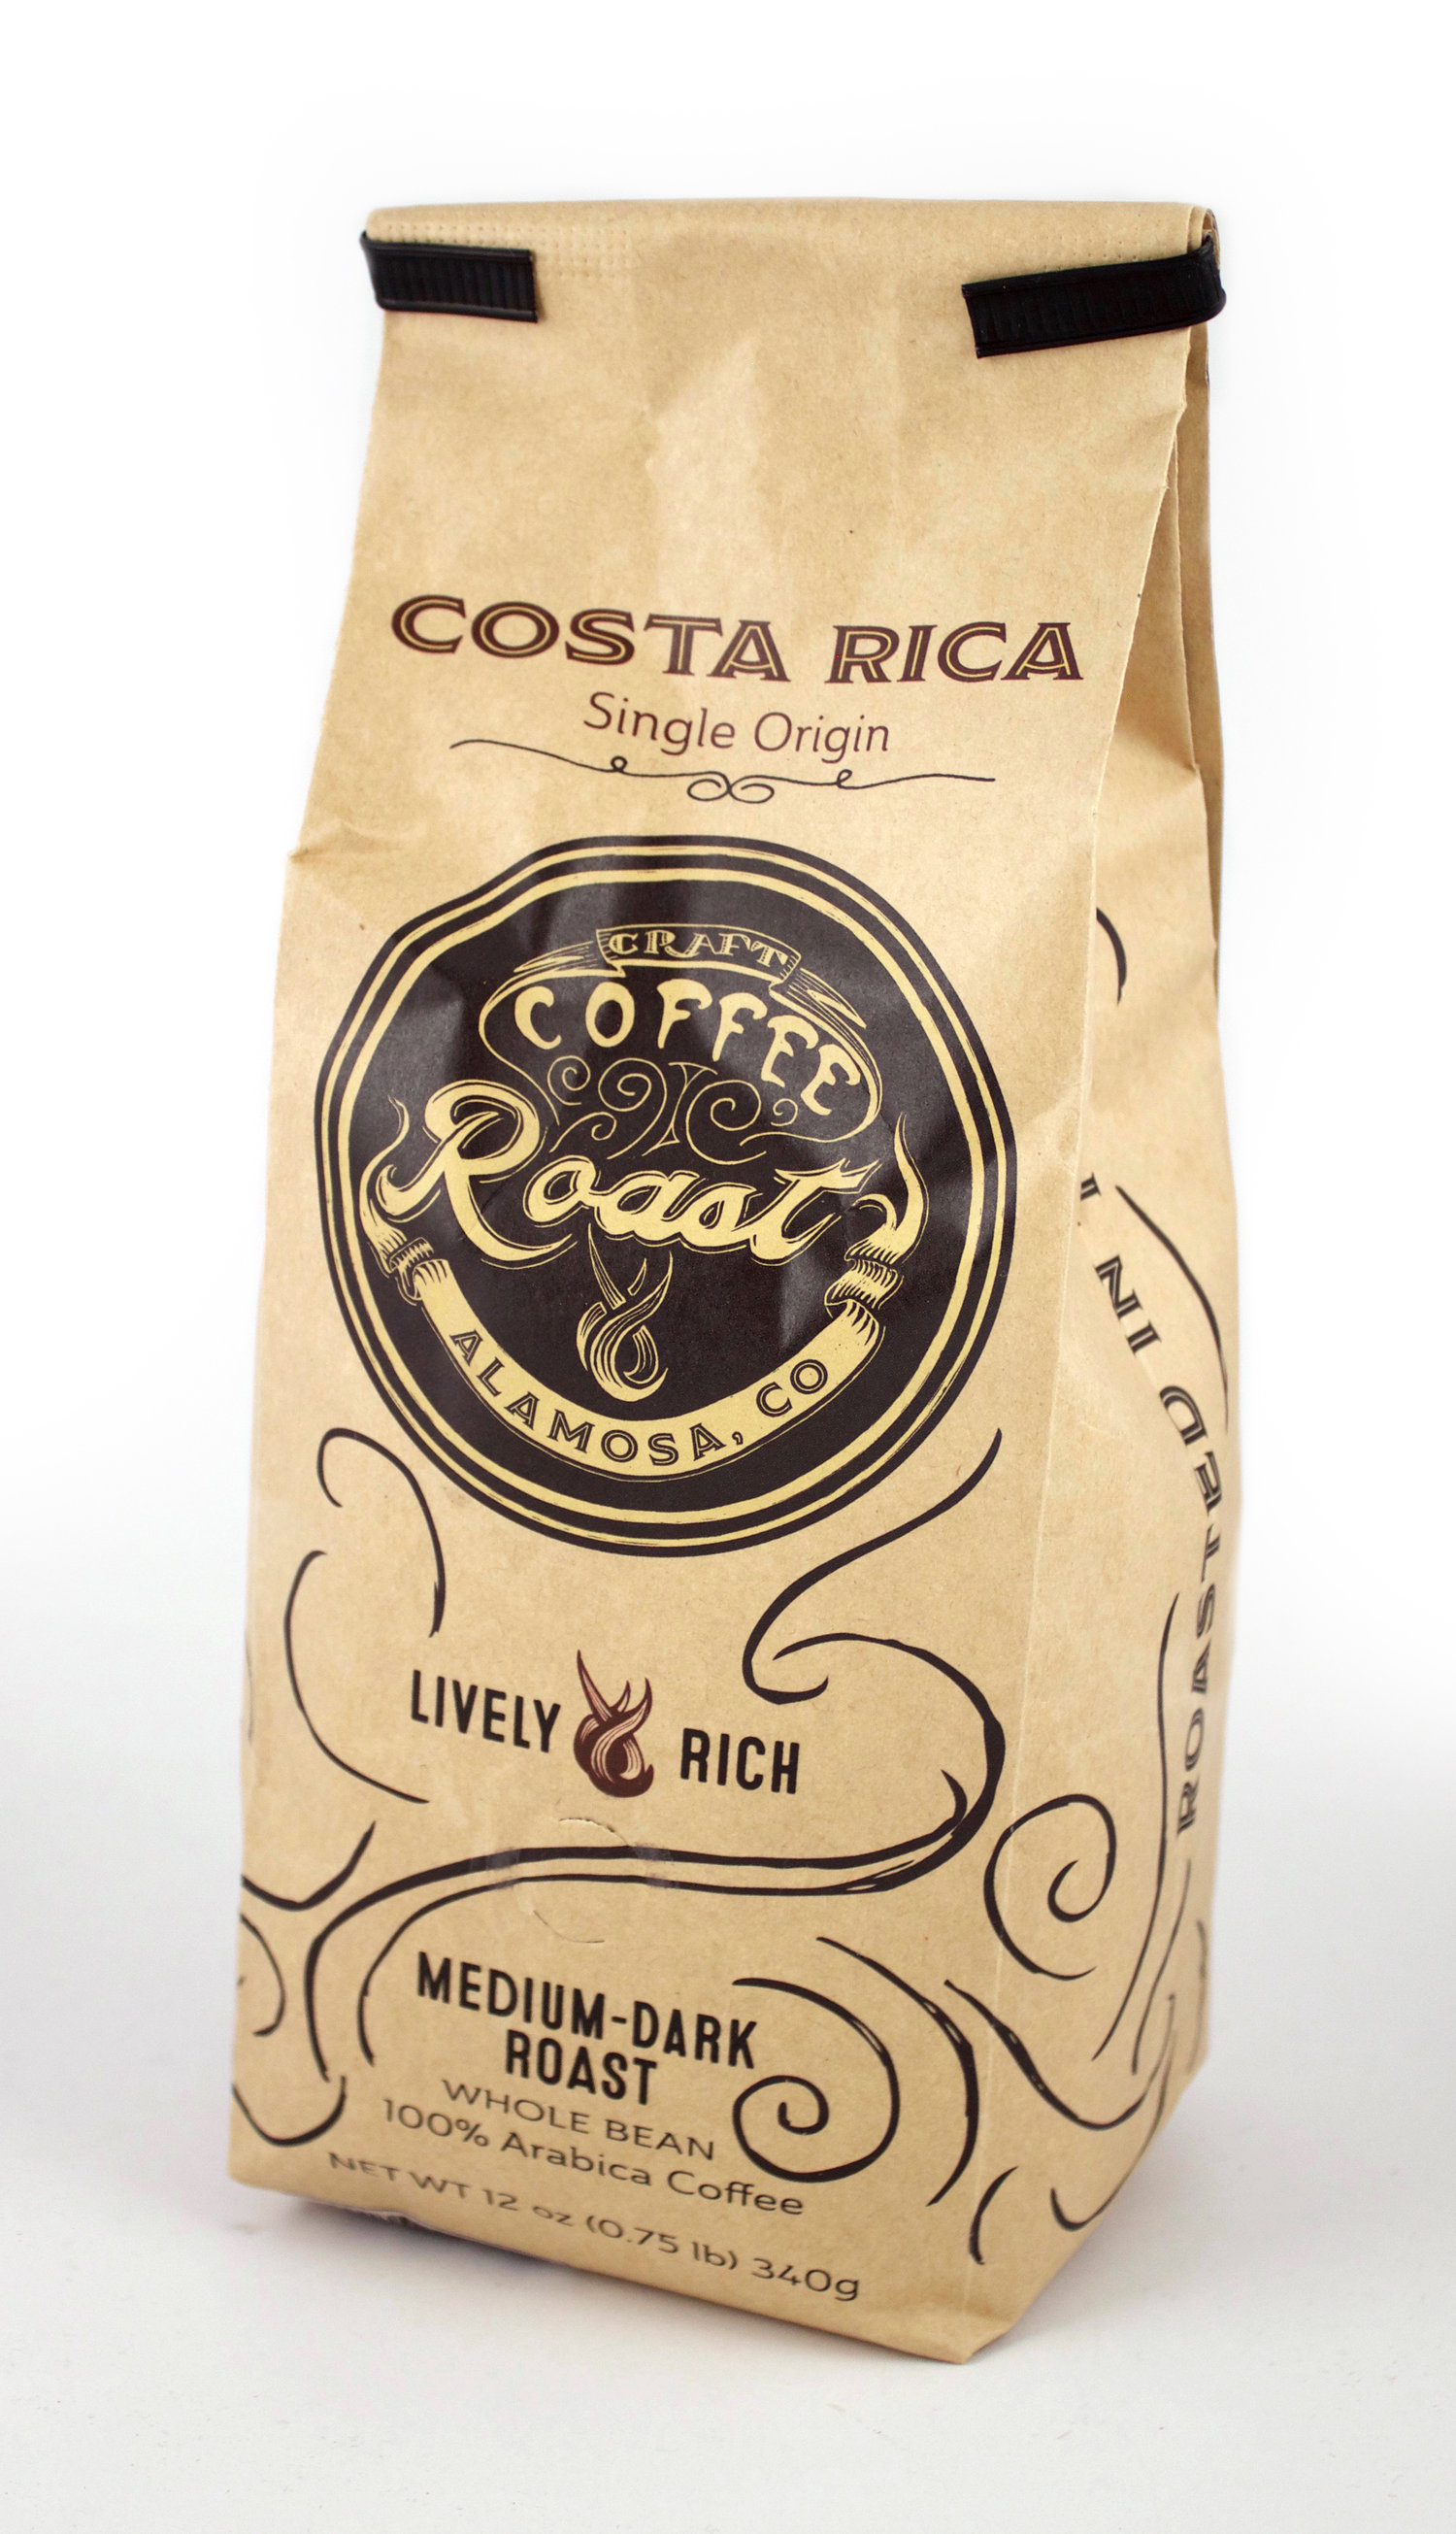 Cúrcuma Chai Latte 300gr – COFFEE CENTER, SL